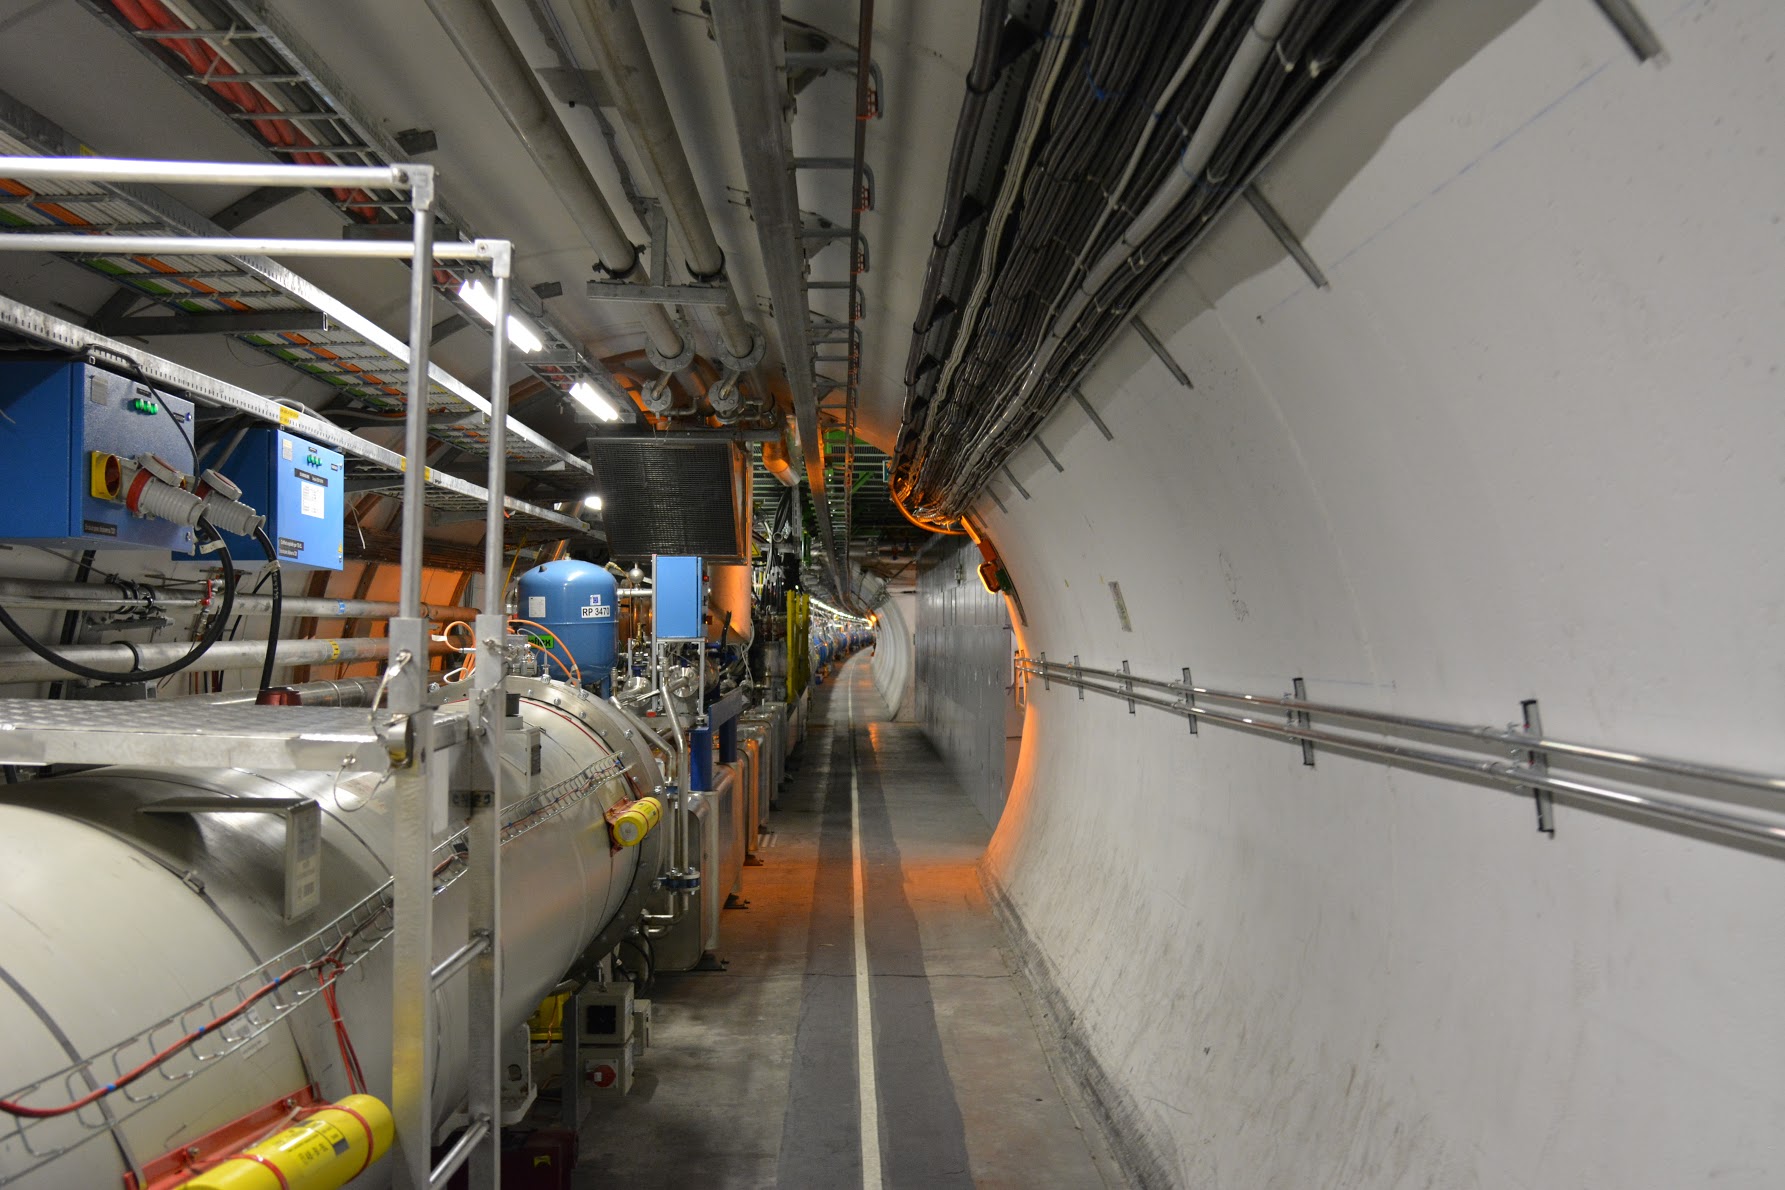 The LHC